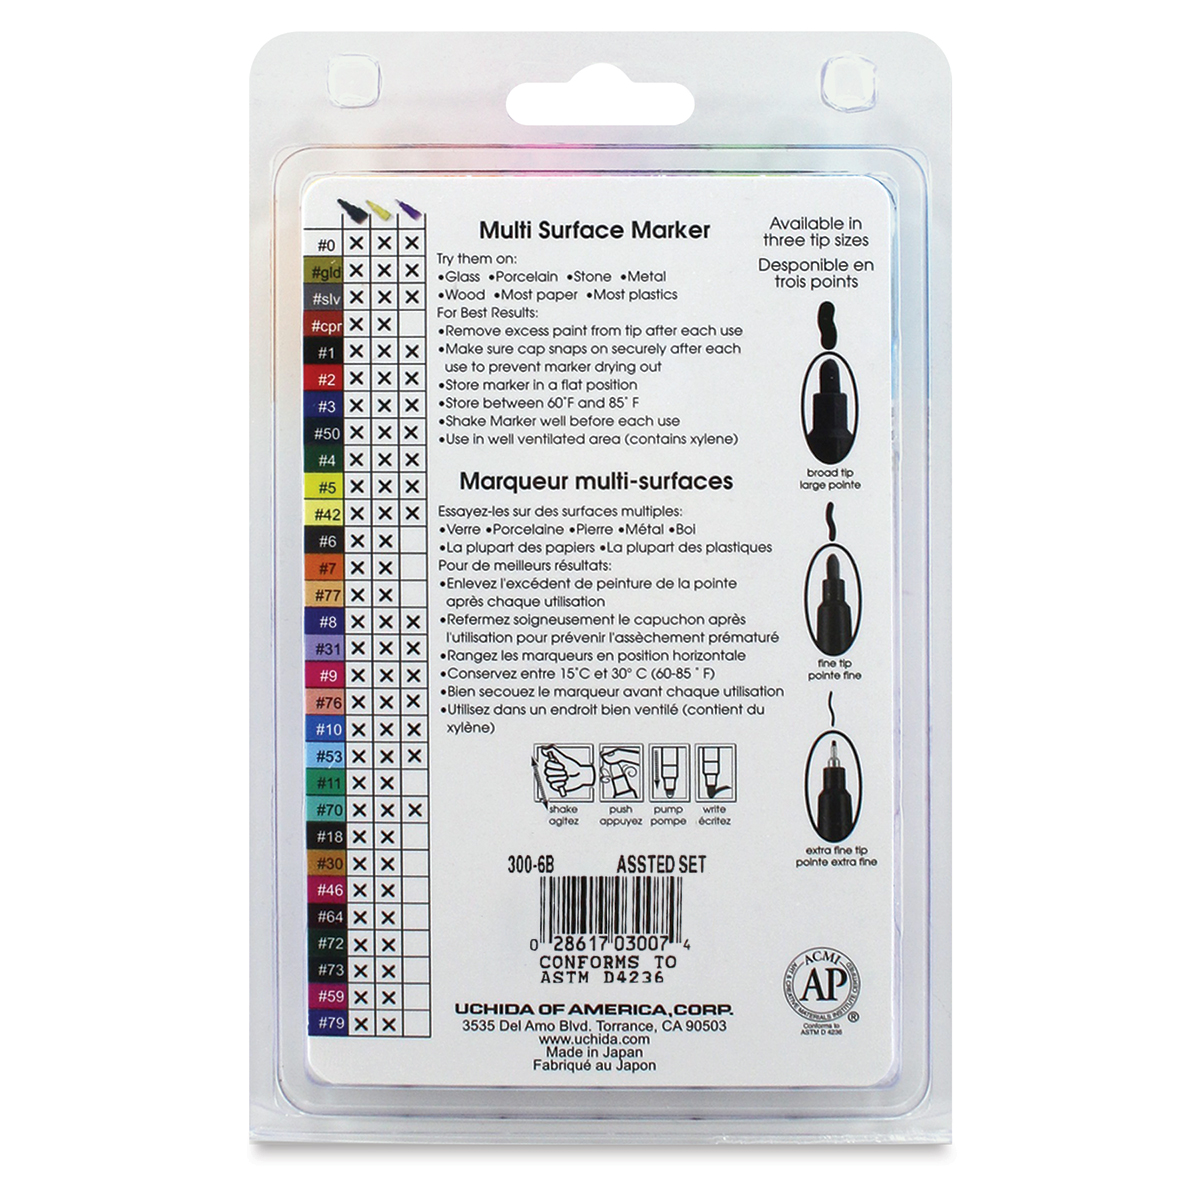 Decocolor Paint Marker Set - Pastel Colors, Broad Tip, Set of 6